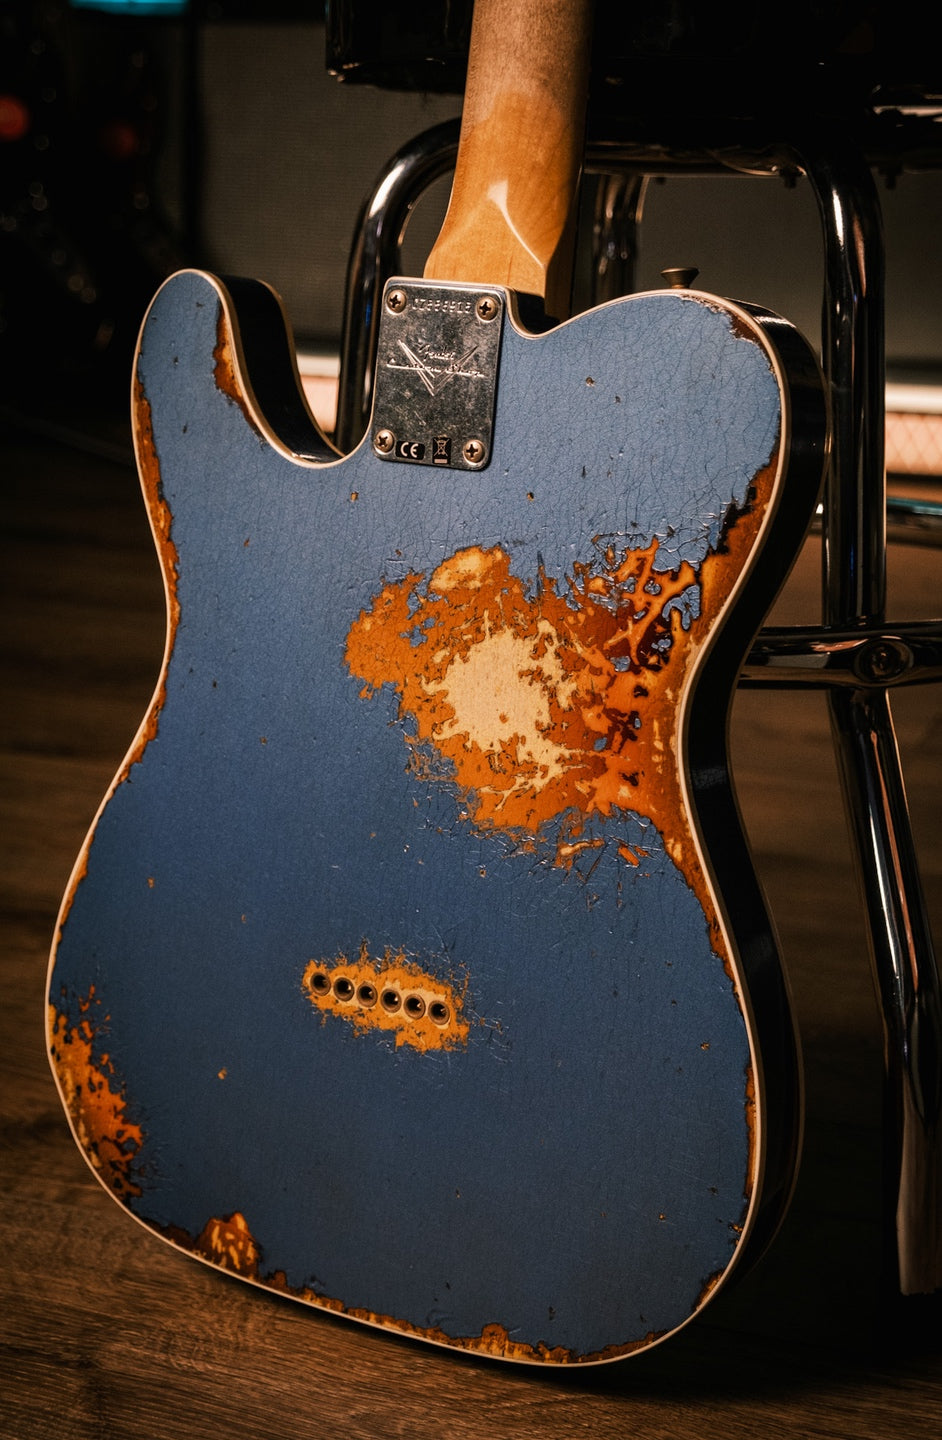 Fender Custom Shop 1960 Telecaster Custom Heavy Relic - Aged Lake Placid Blue over Chocolate 3 Tone Sunburst